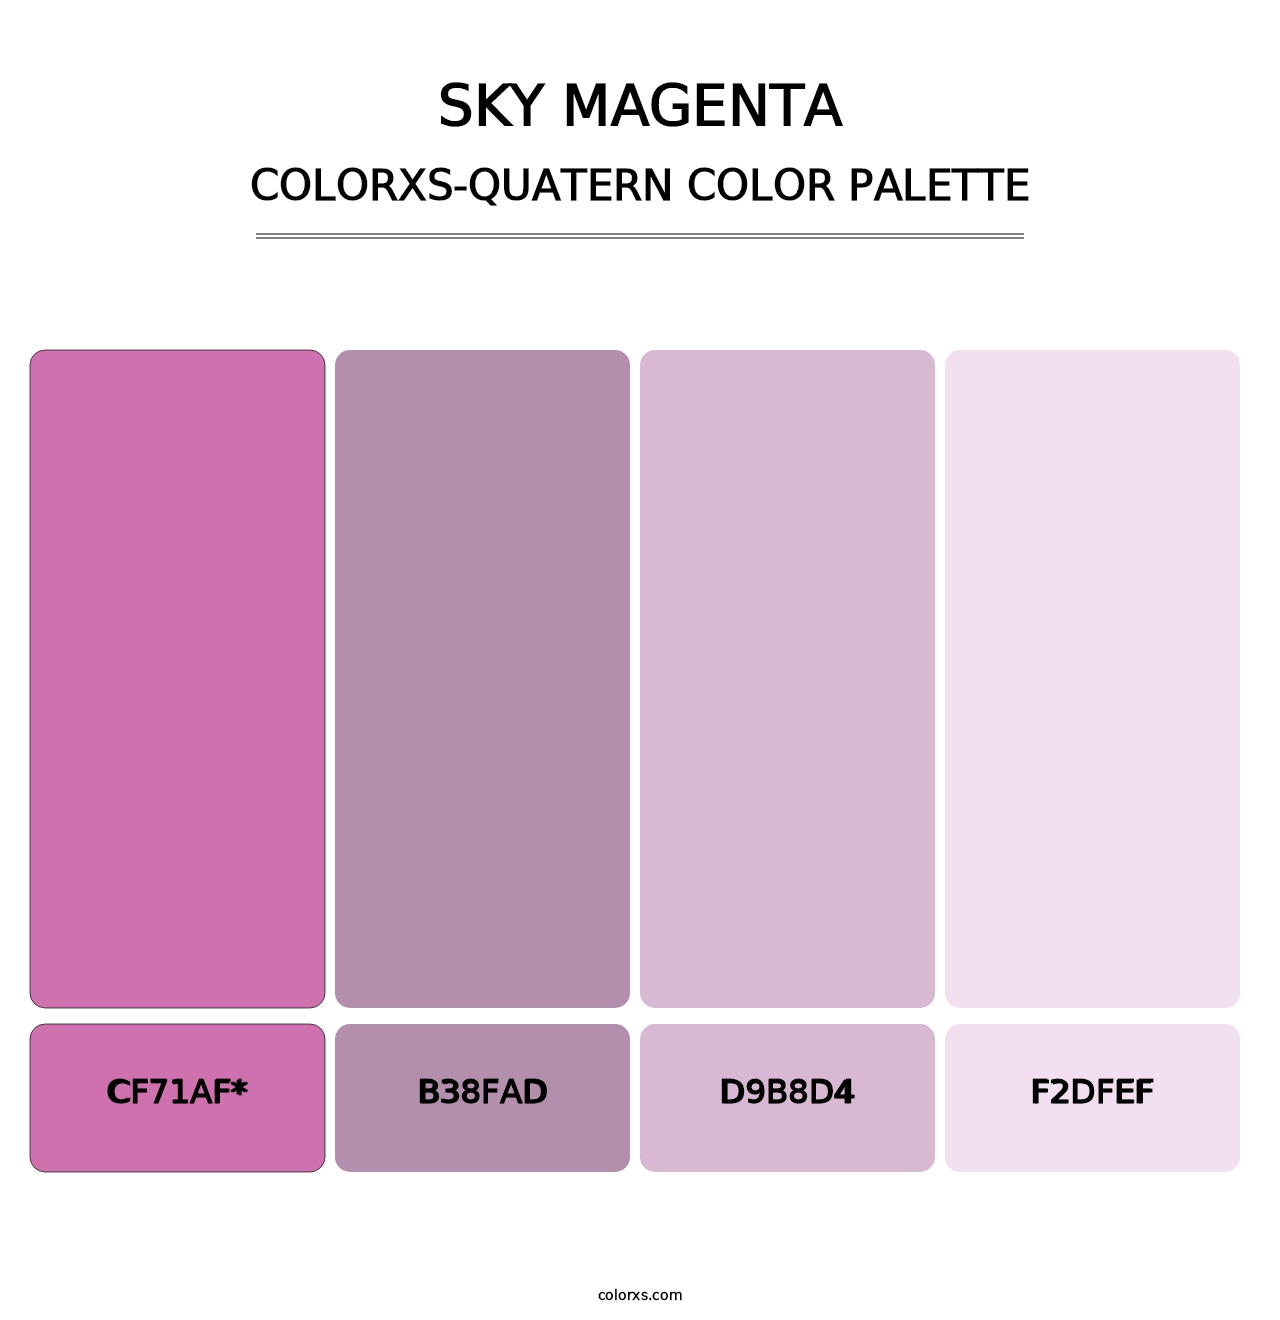 Sky Magenta - Colorxs Quatern Palette